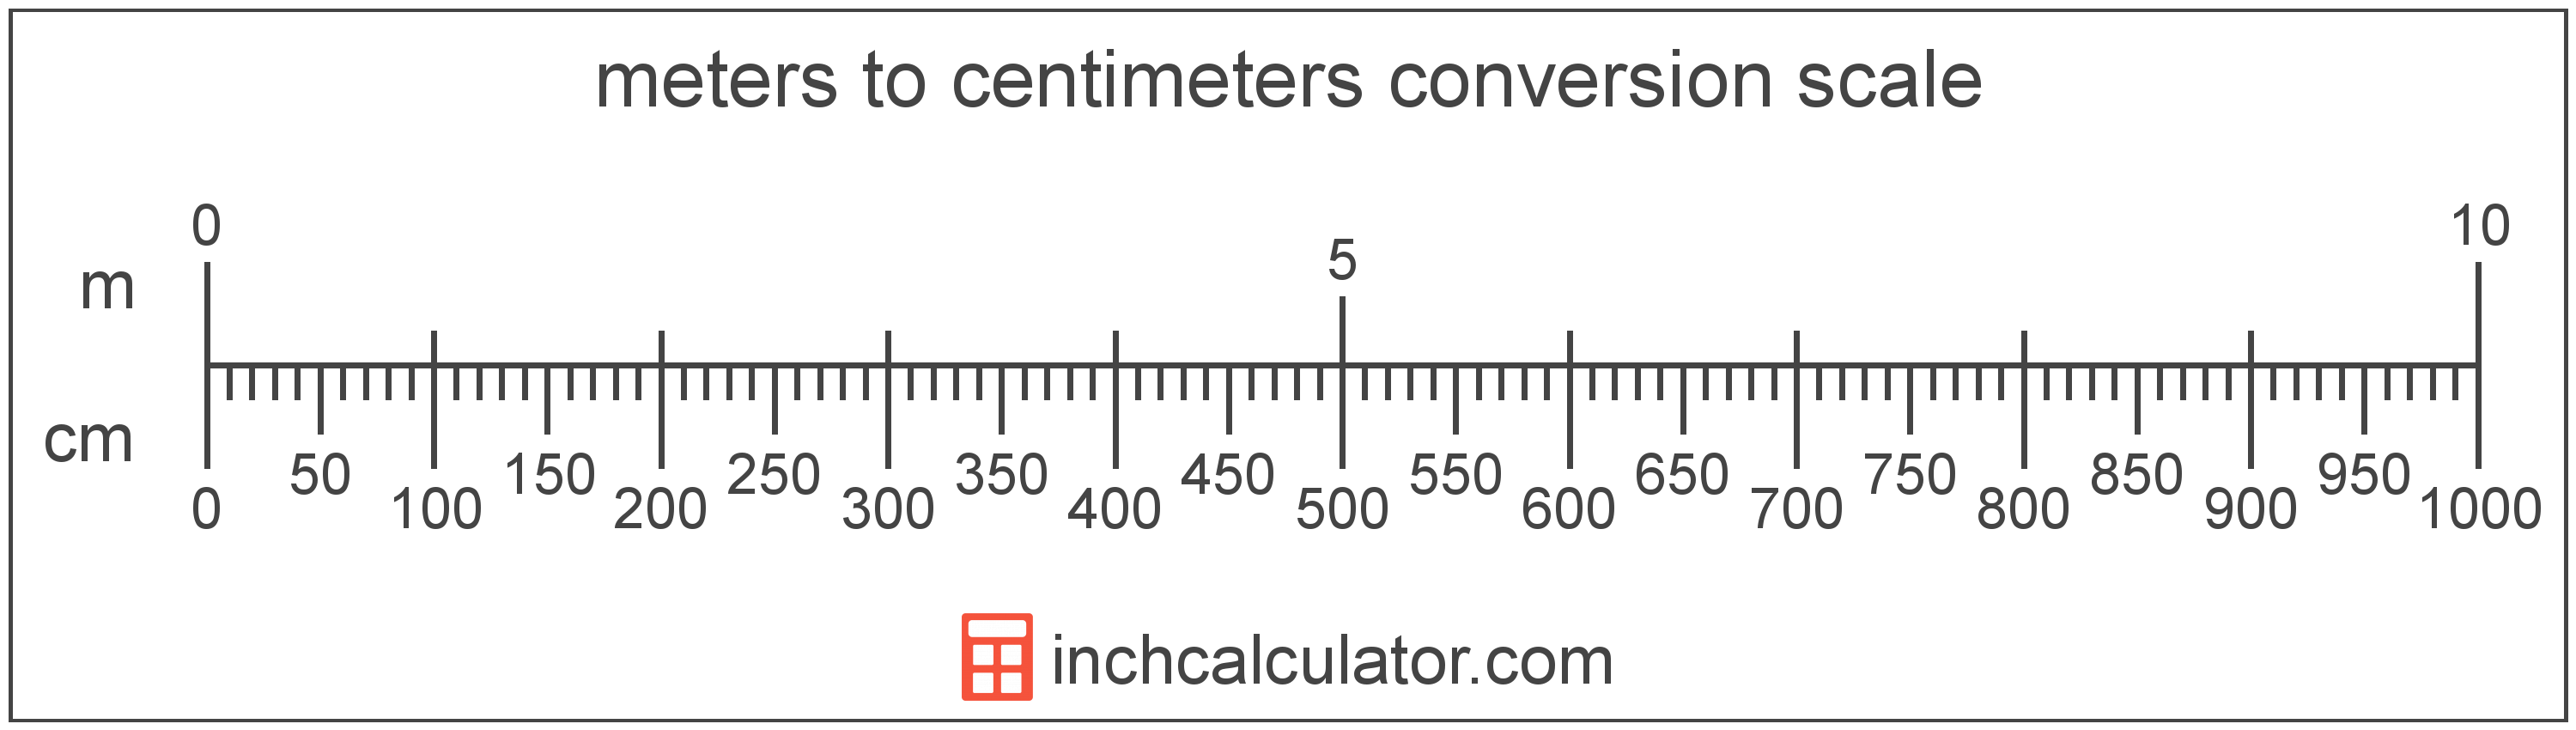 convert-meter-into-centimeter-flowchart-chart-examples